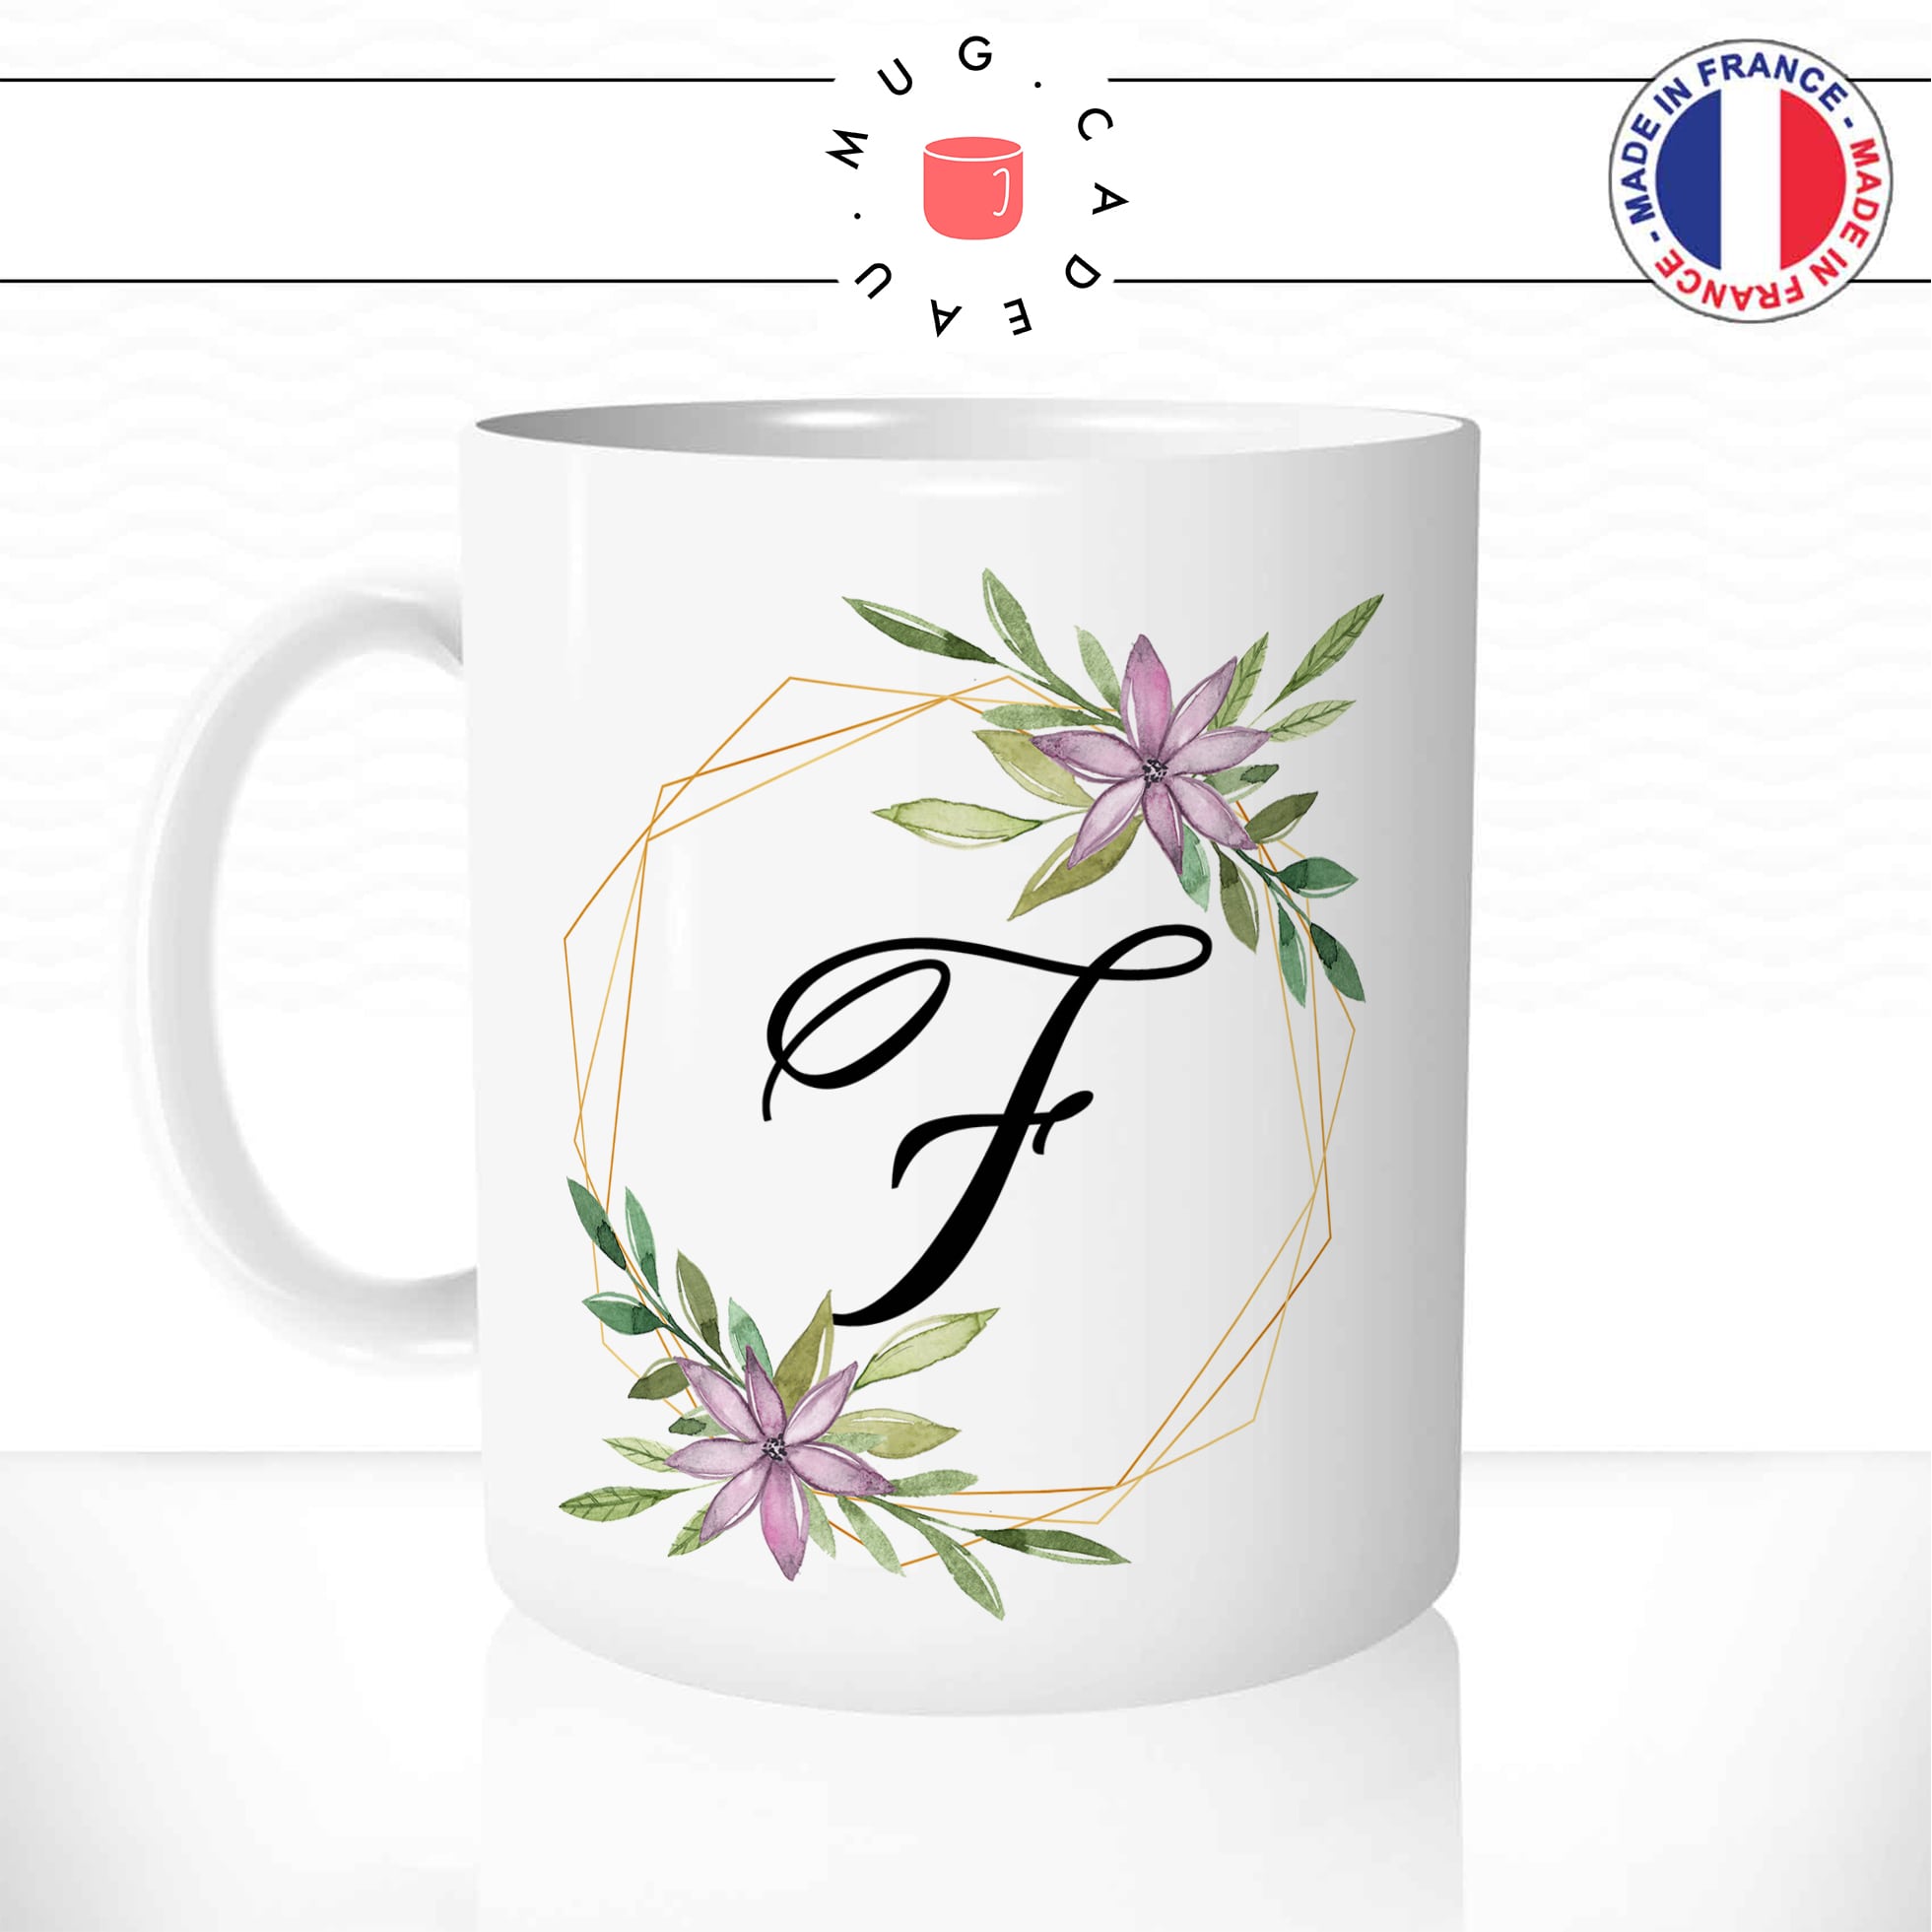 mug-tasse-initiale-fleurs-prénom-nom-lettre-f-flower-fun-matin-café-thé-mugs-tasses-idée-cadeau-original-personnalisée-min